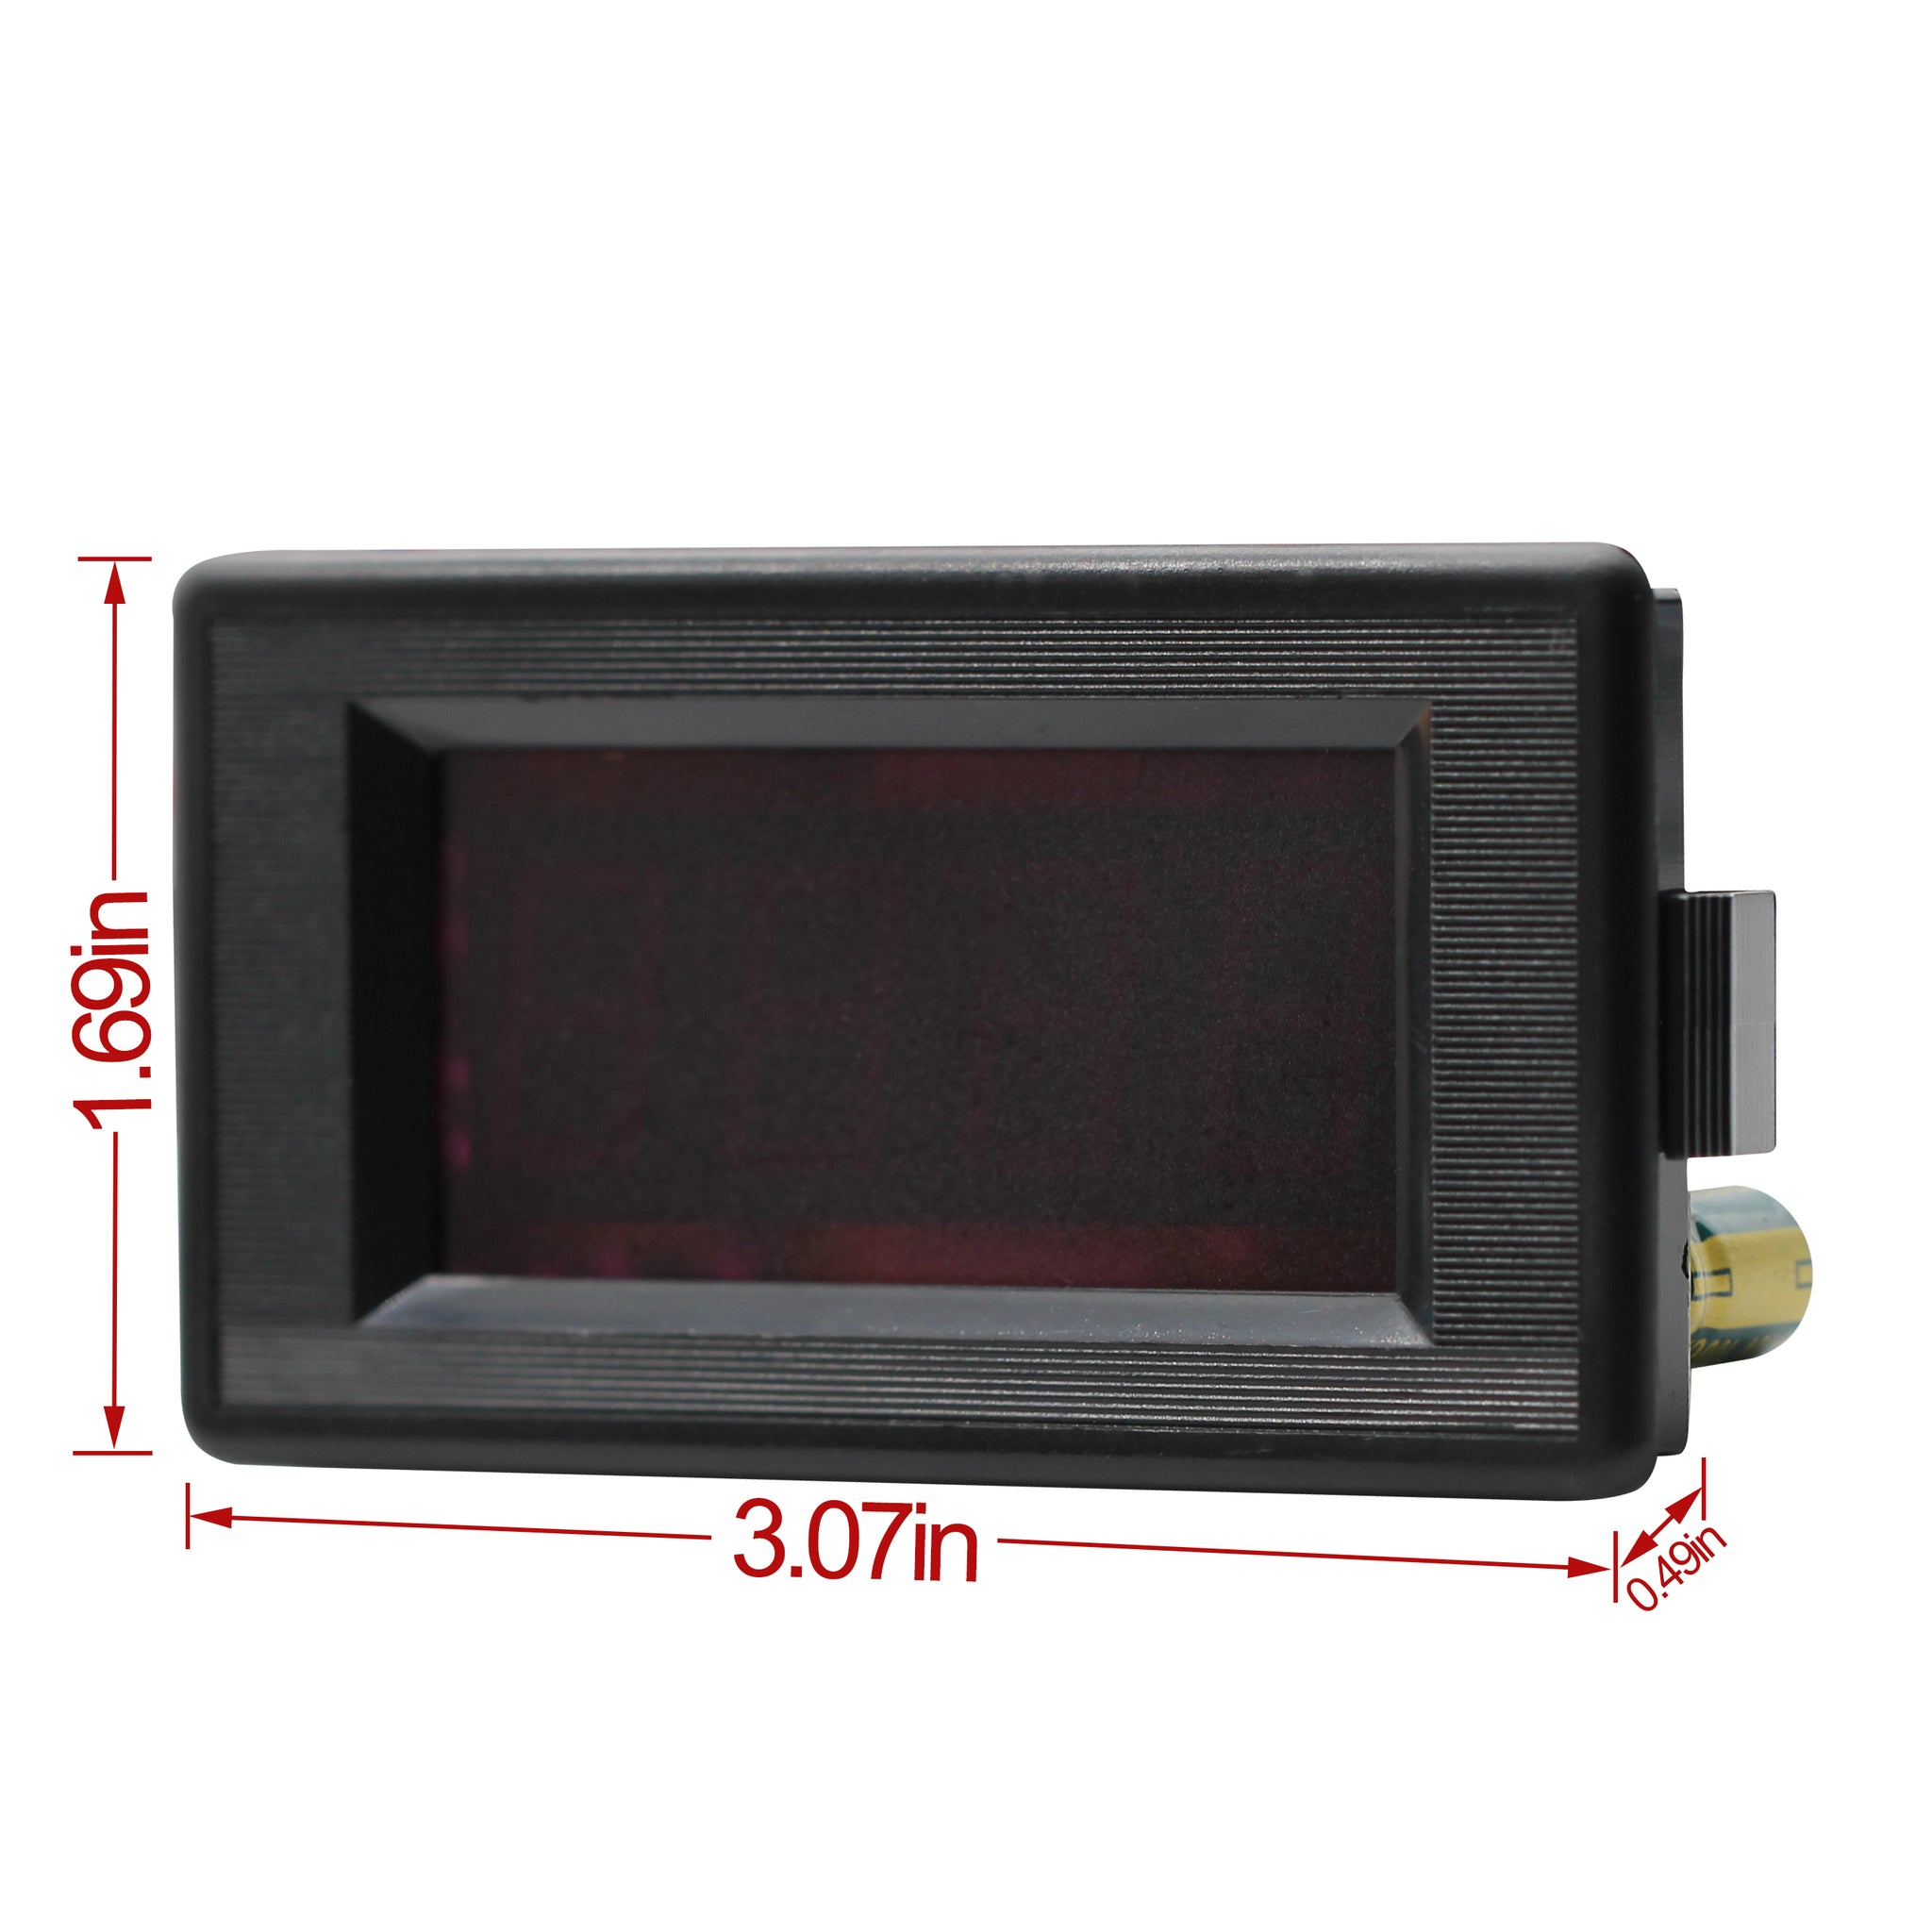 DIGITEN 0-999999 Digital LED Counter +PhotoElectric Switch Sensor +Ref